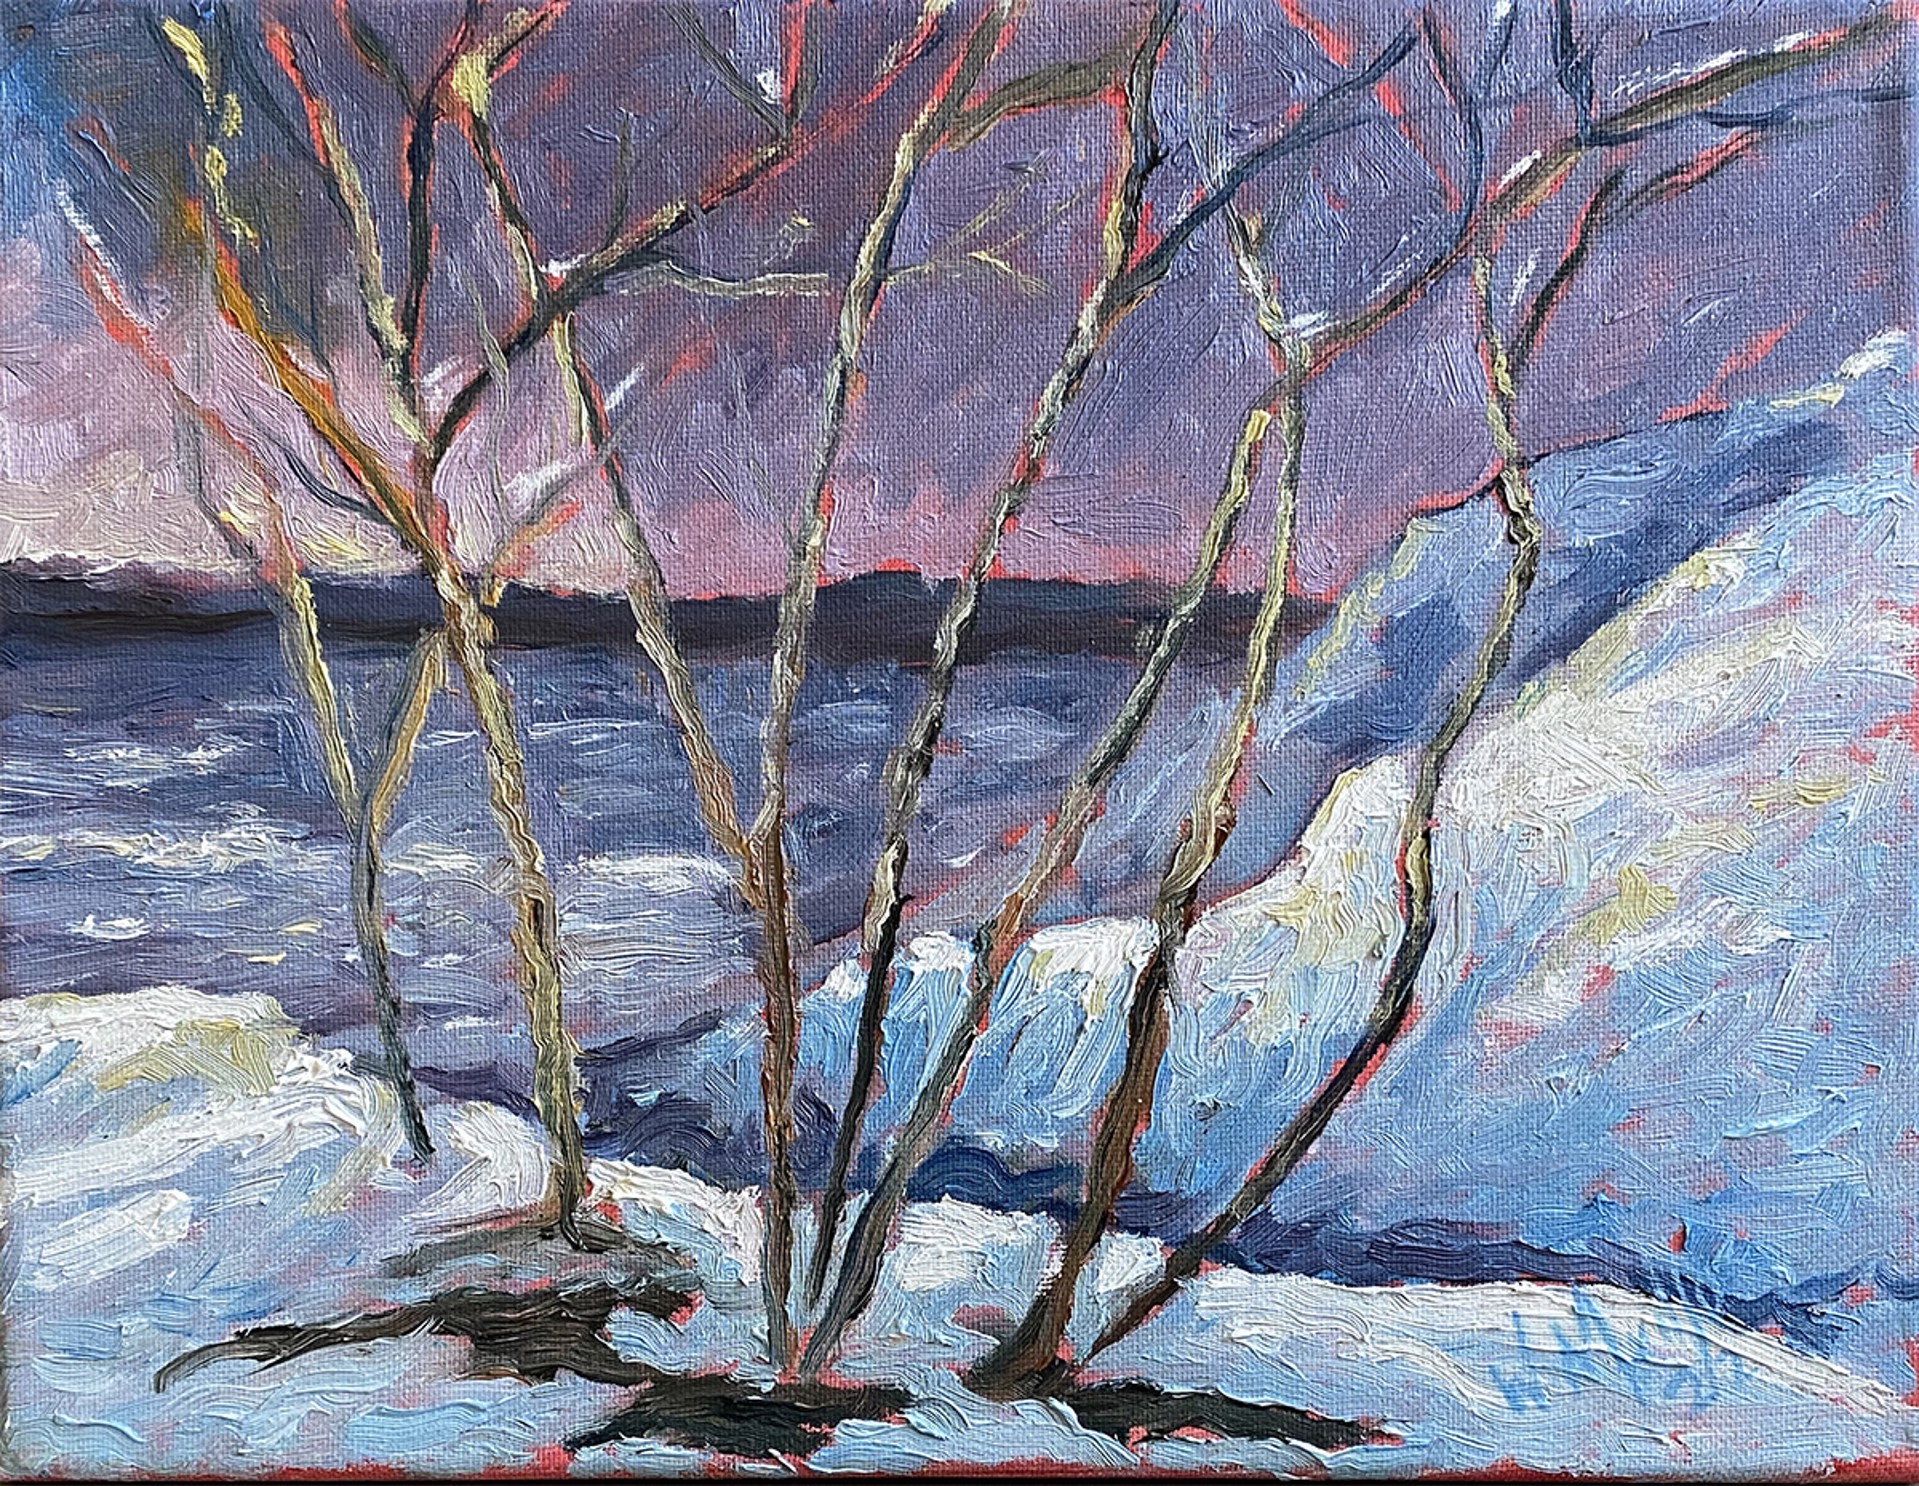 Winter Sky by Wayne Medford